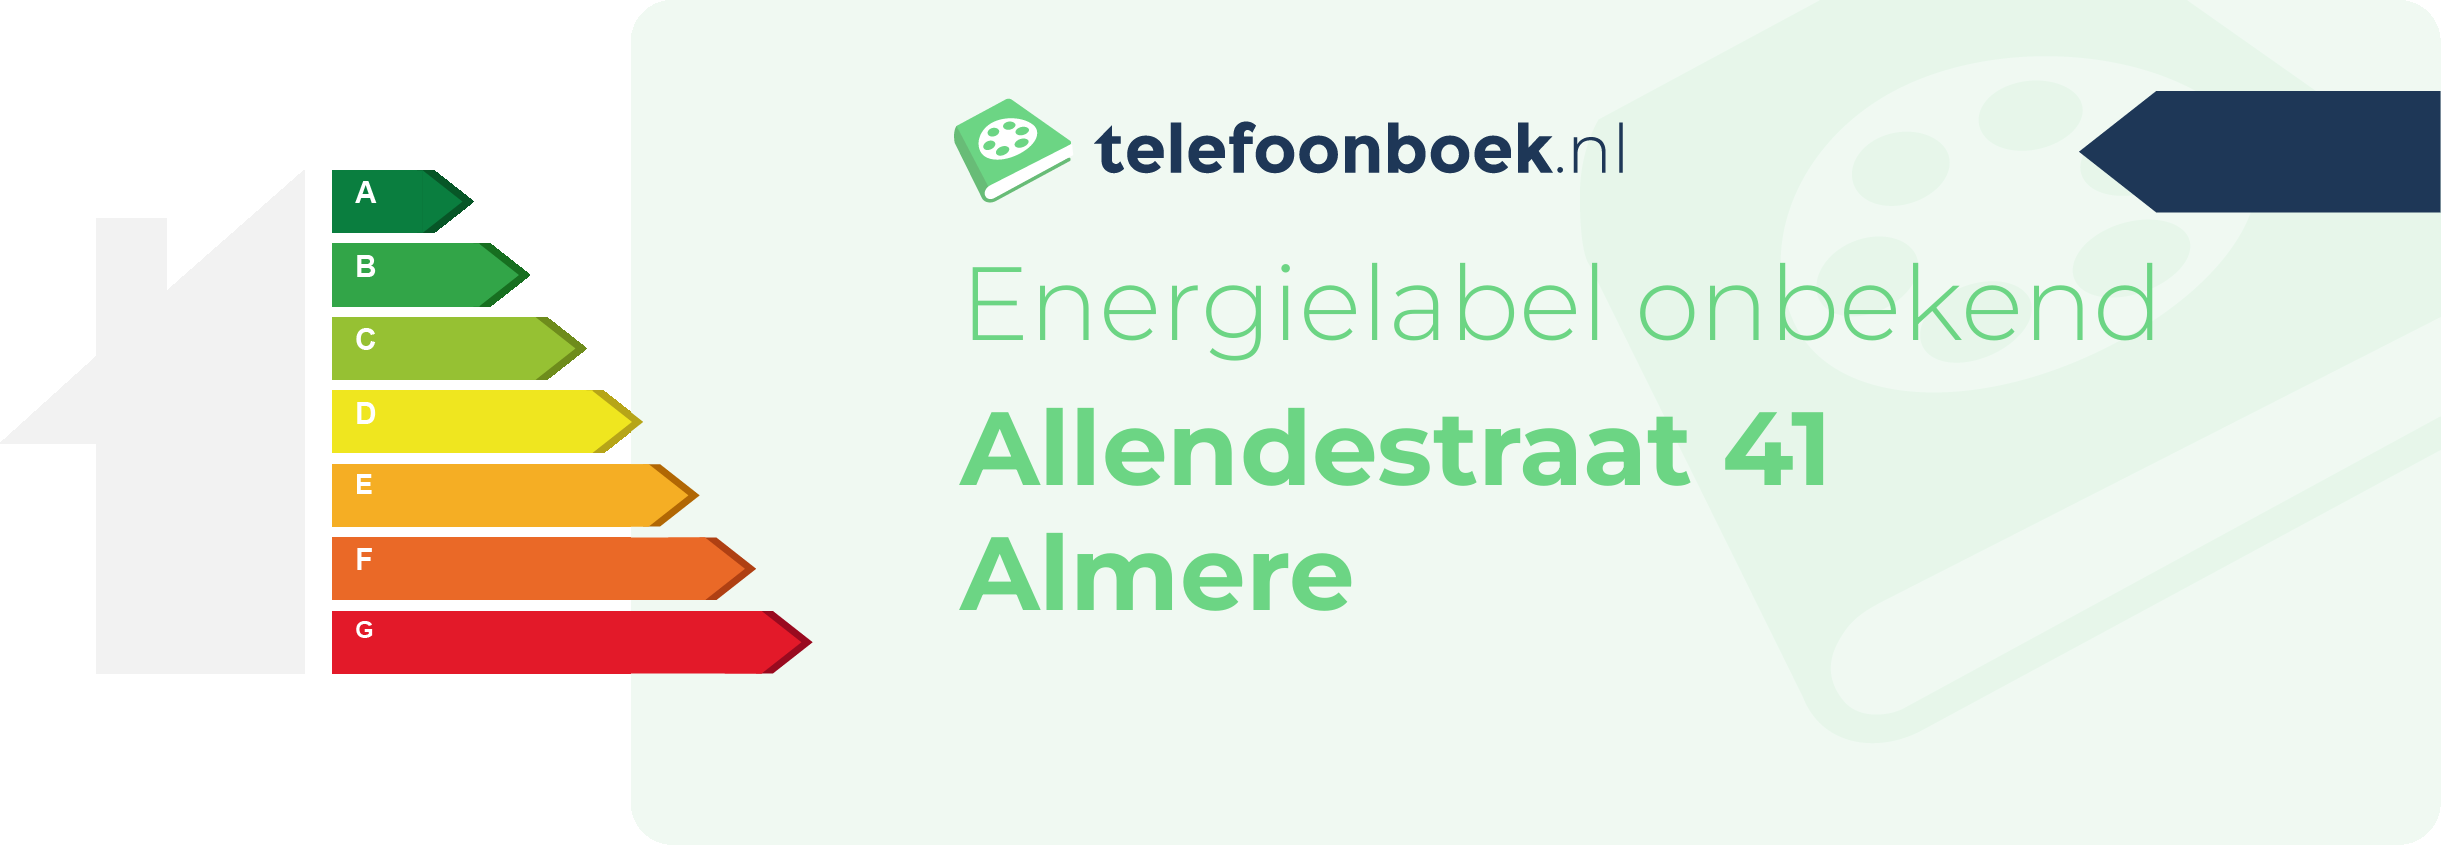 Energielabel Allendestraat 41 Almere